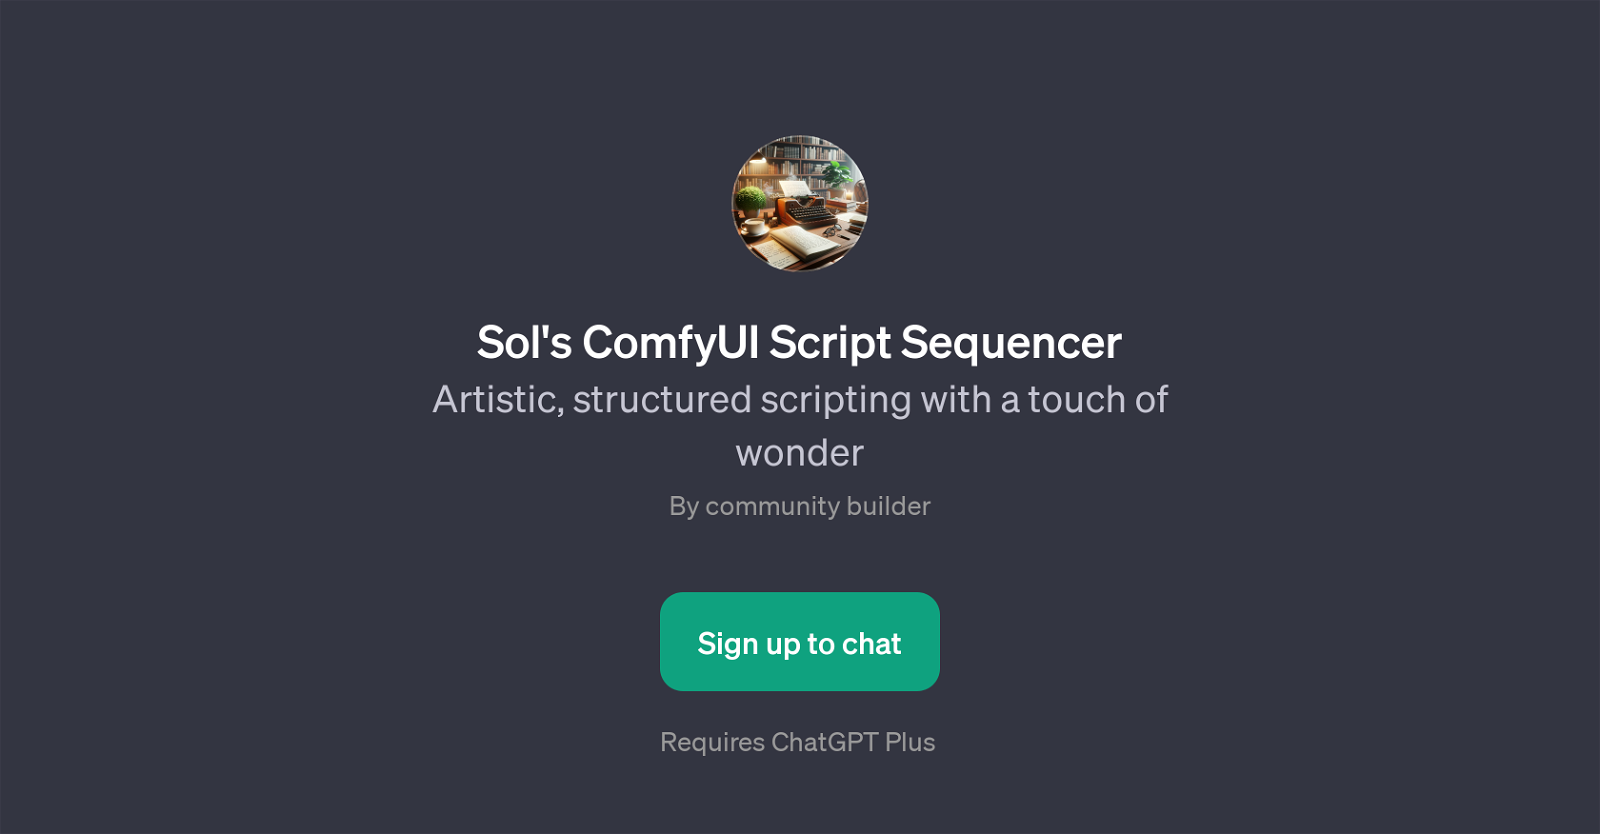 Sol's ComfyUI Script Sequencer website